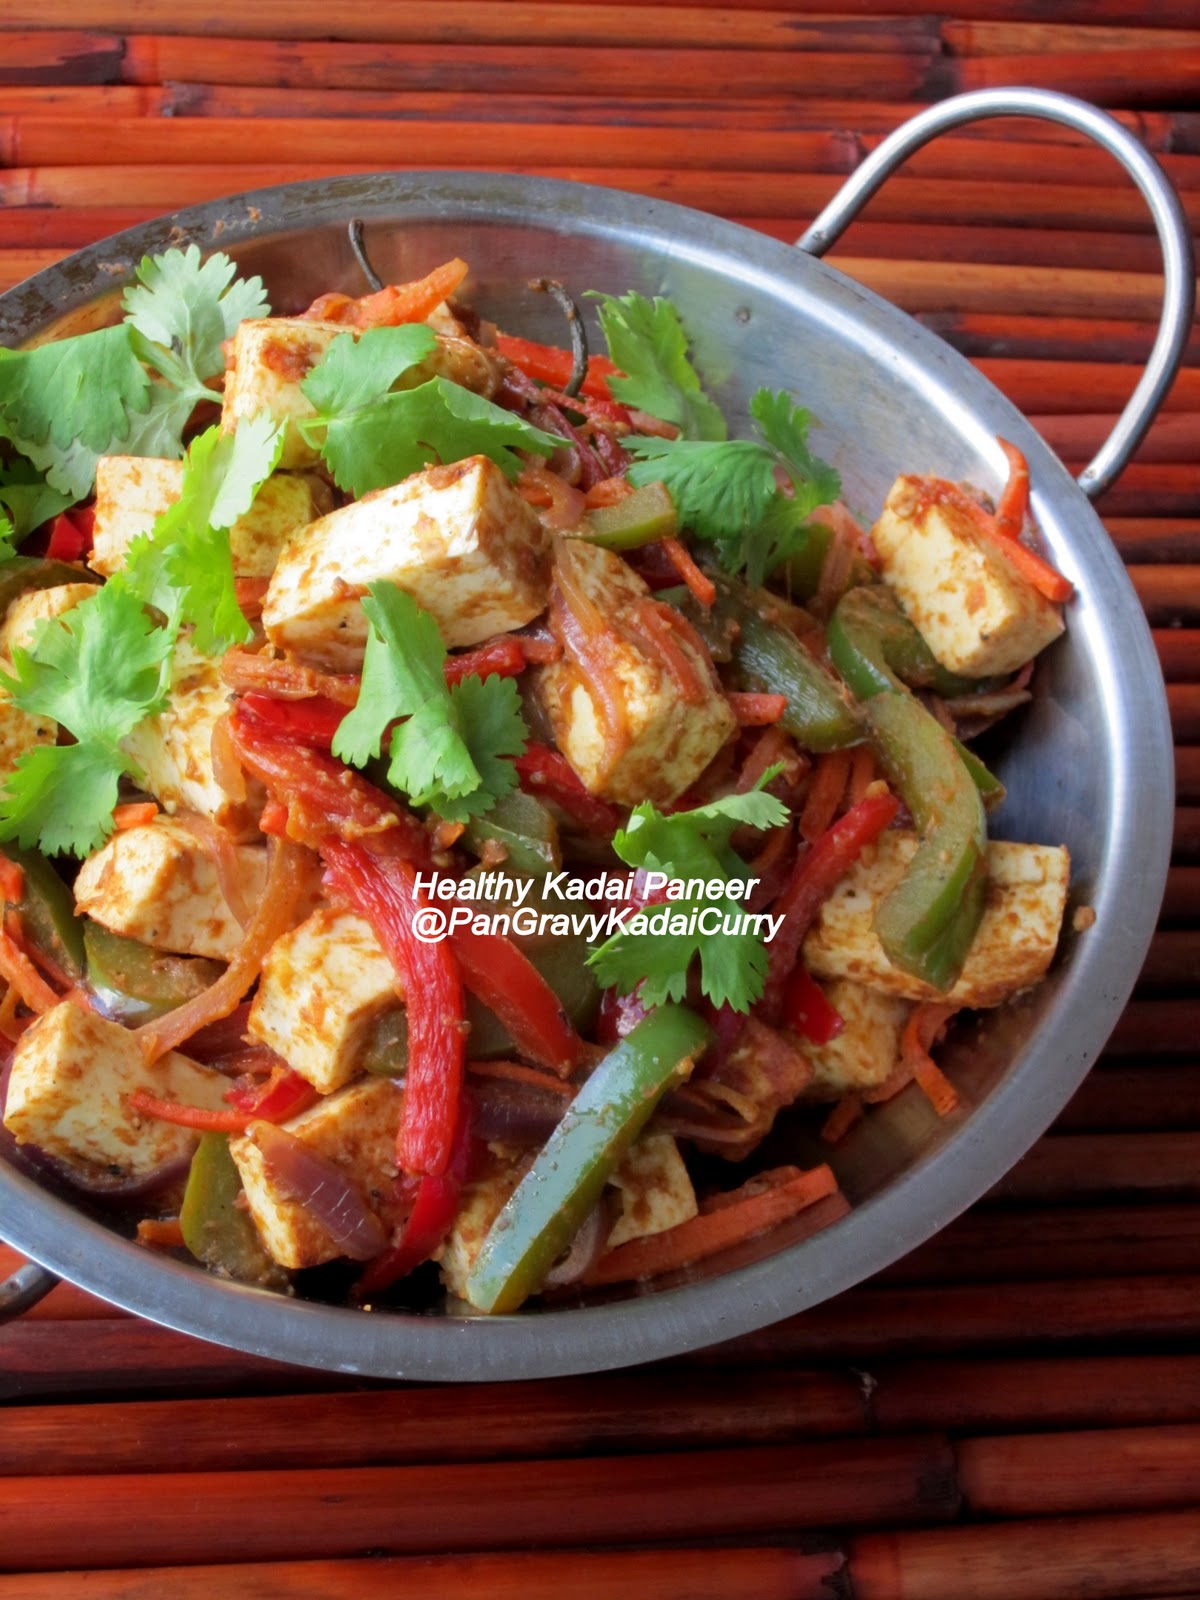 Pan Gravy Kadai Curry: Healthy 